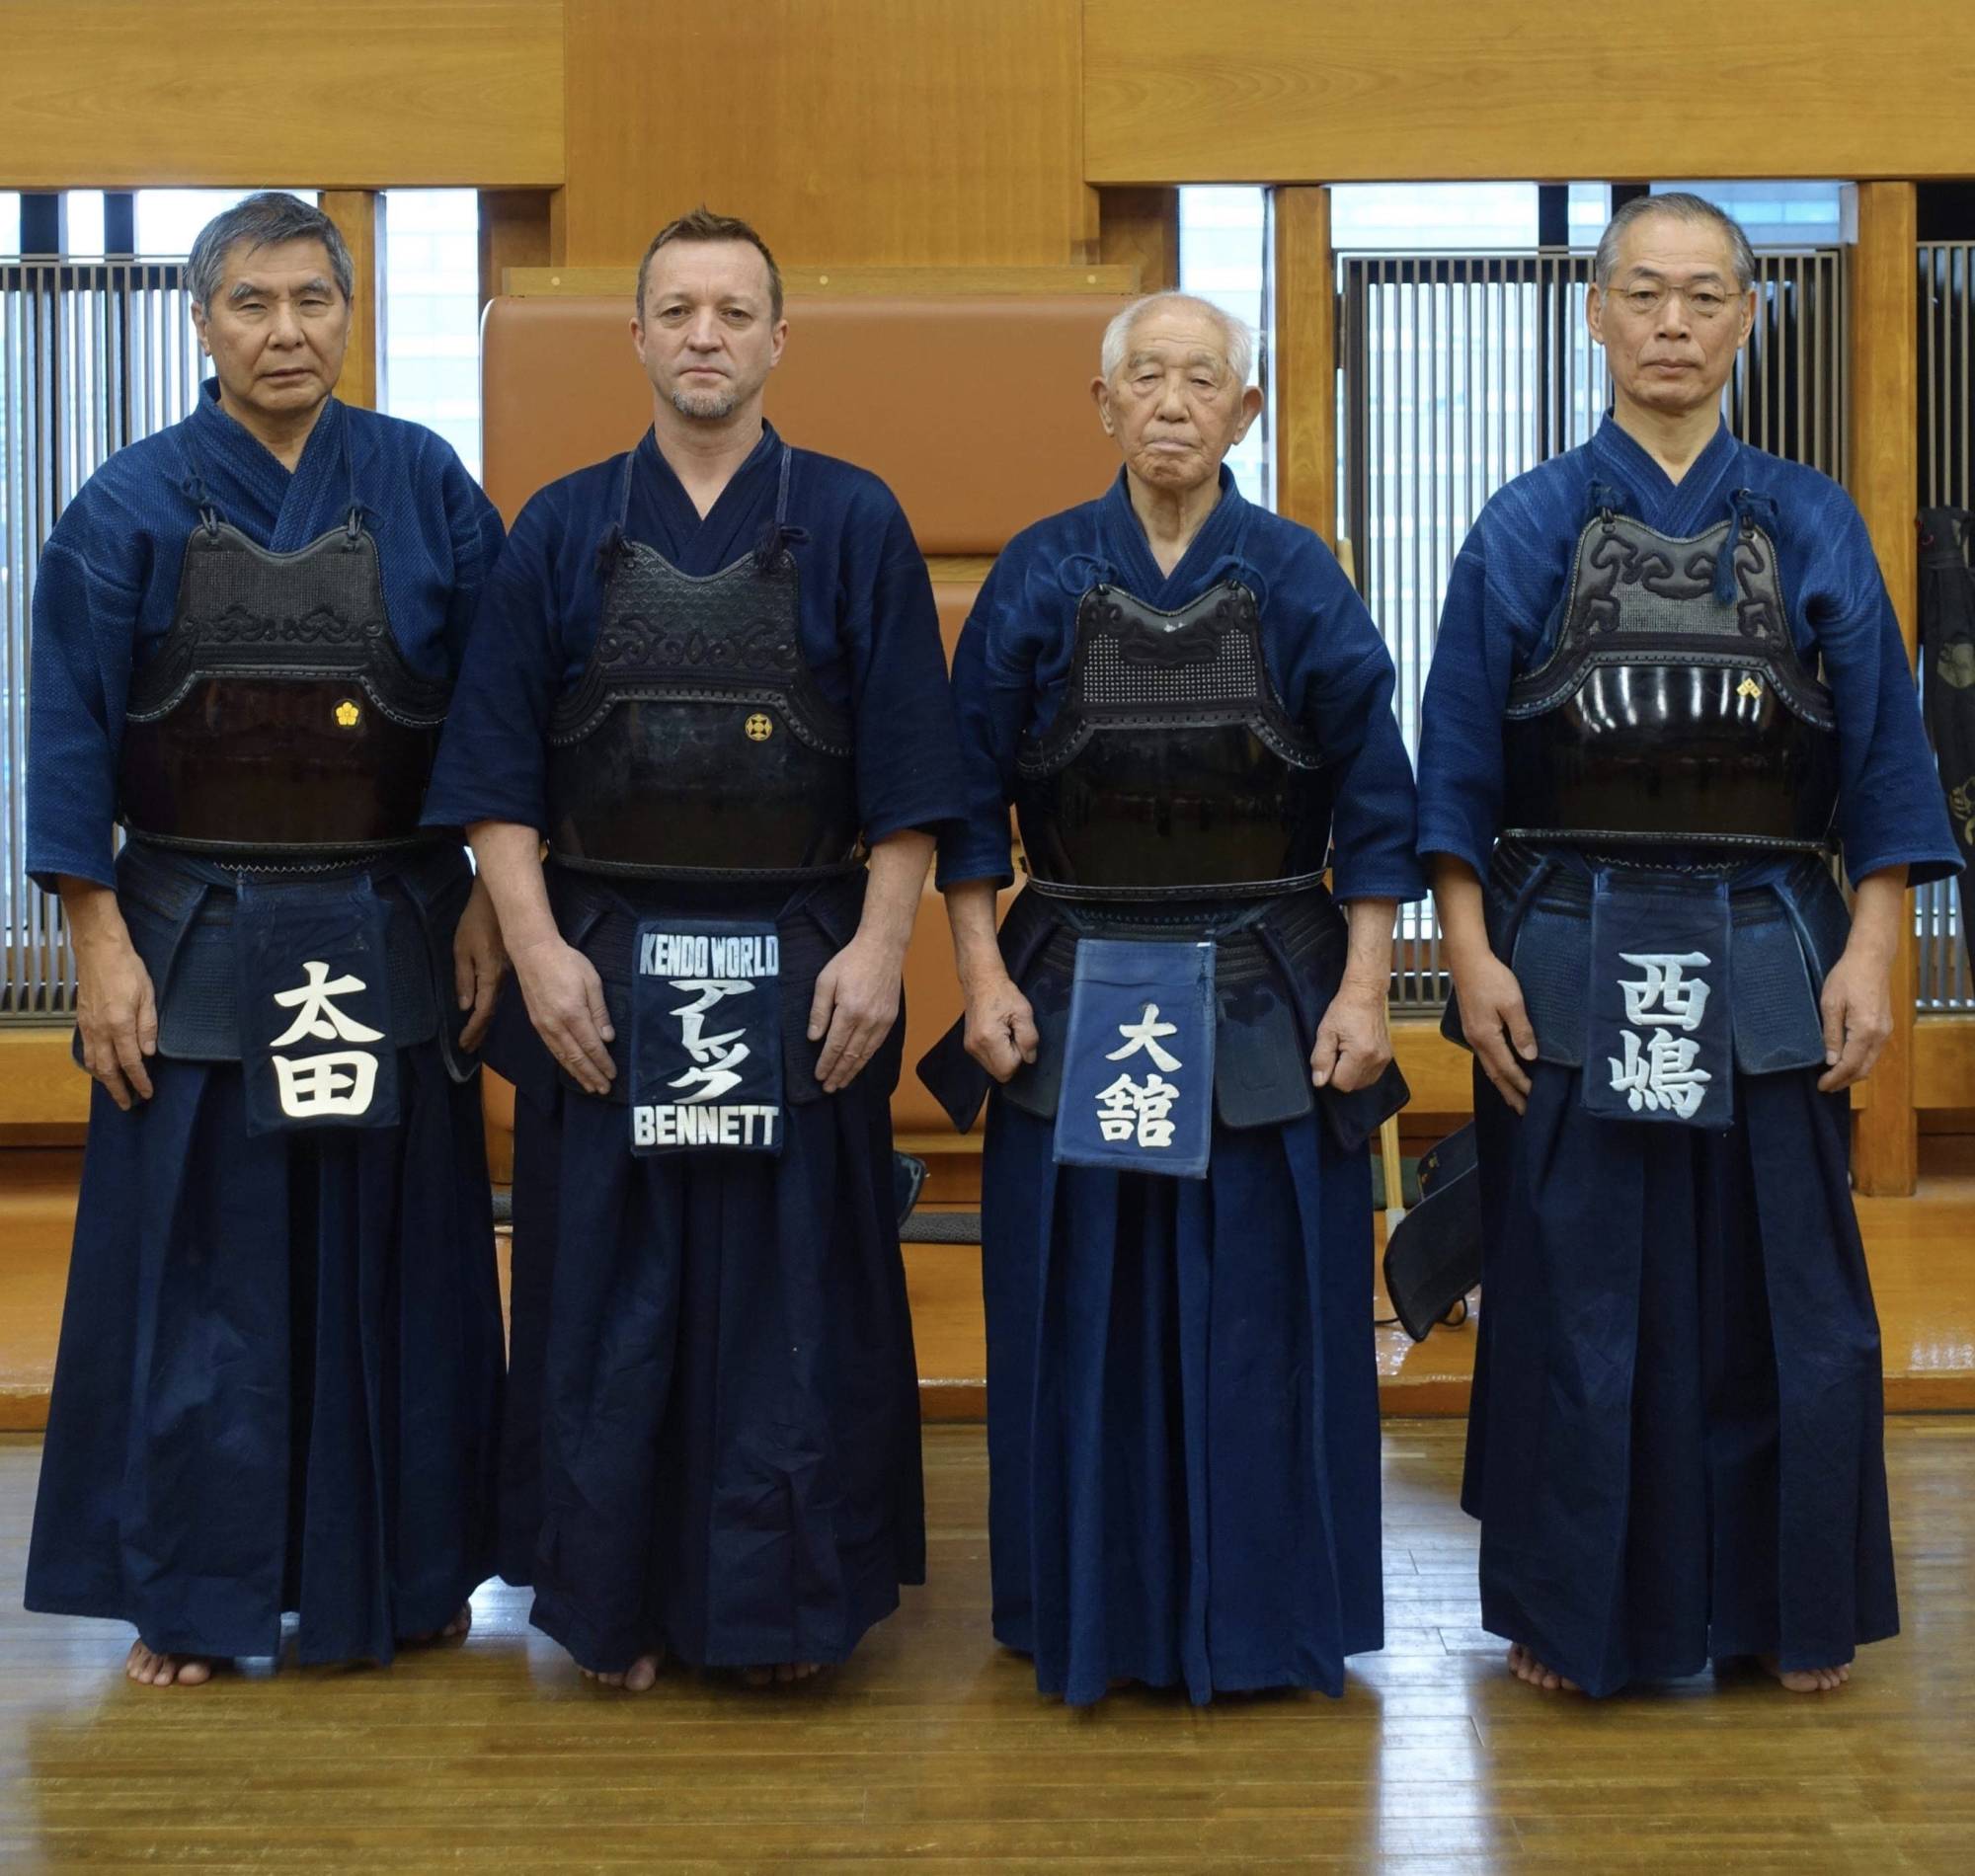 From left to right:
Shigeru Ohta - Alexander Bennet - Kazuo Odachi - Hiroyoshi Nishijima